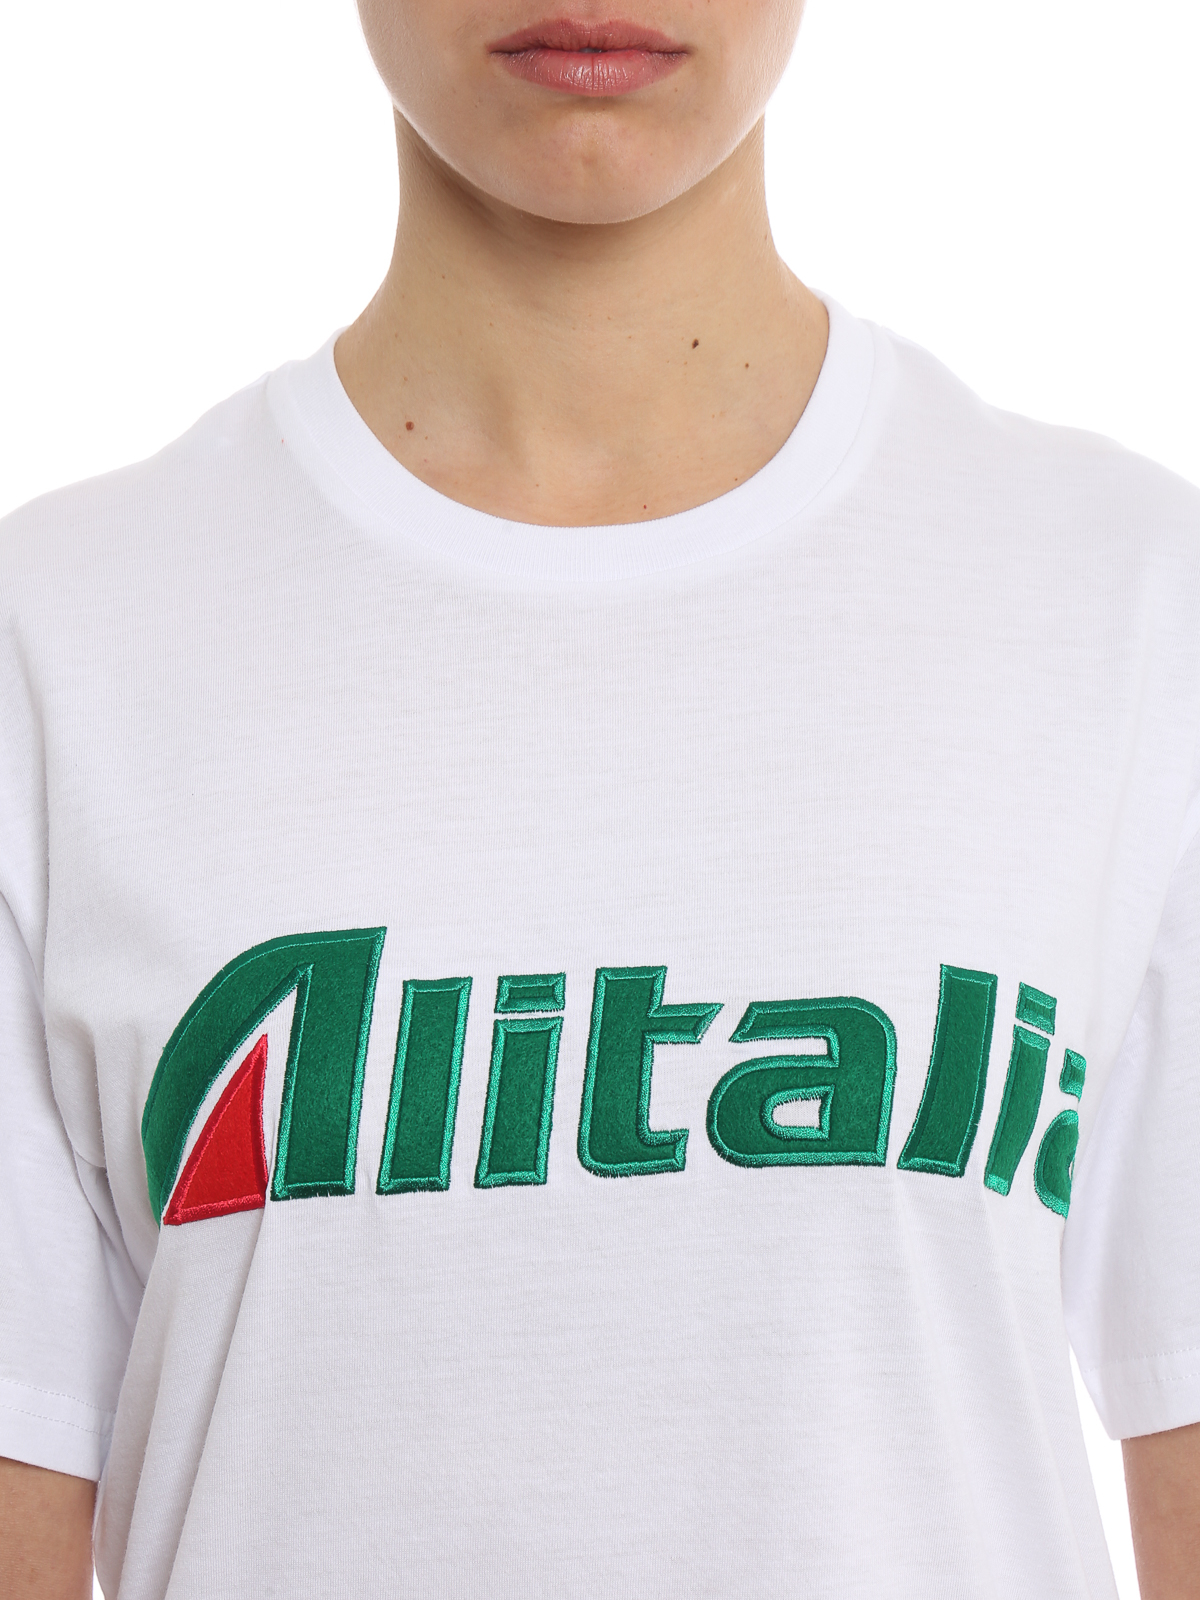 Relativ størrelse Soldat Certifikat T-shirts Alberta Ferretti - Alitalia embroidered logo T-shirt -  J070116720001